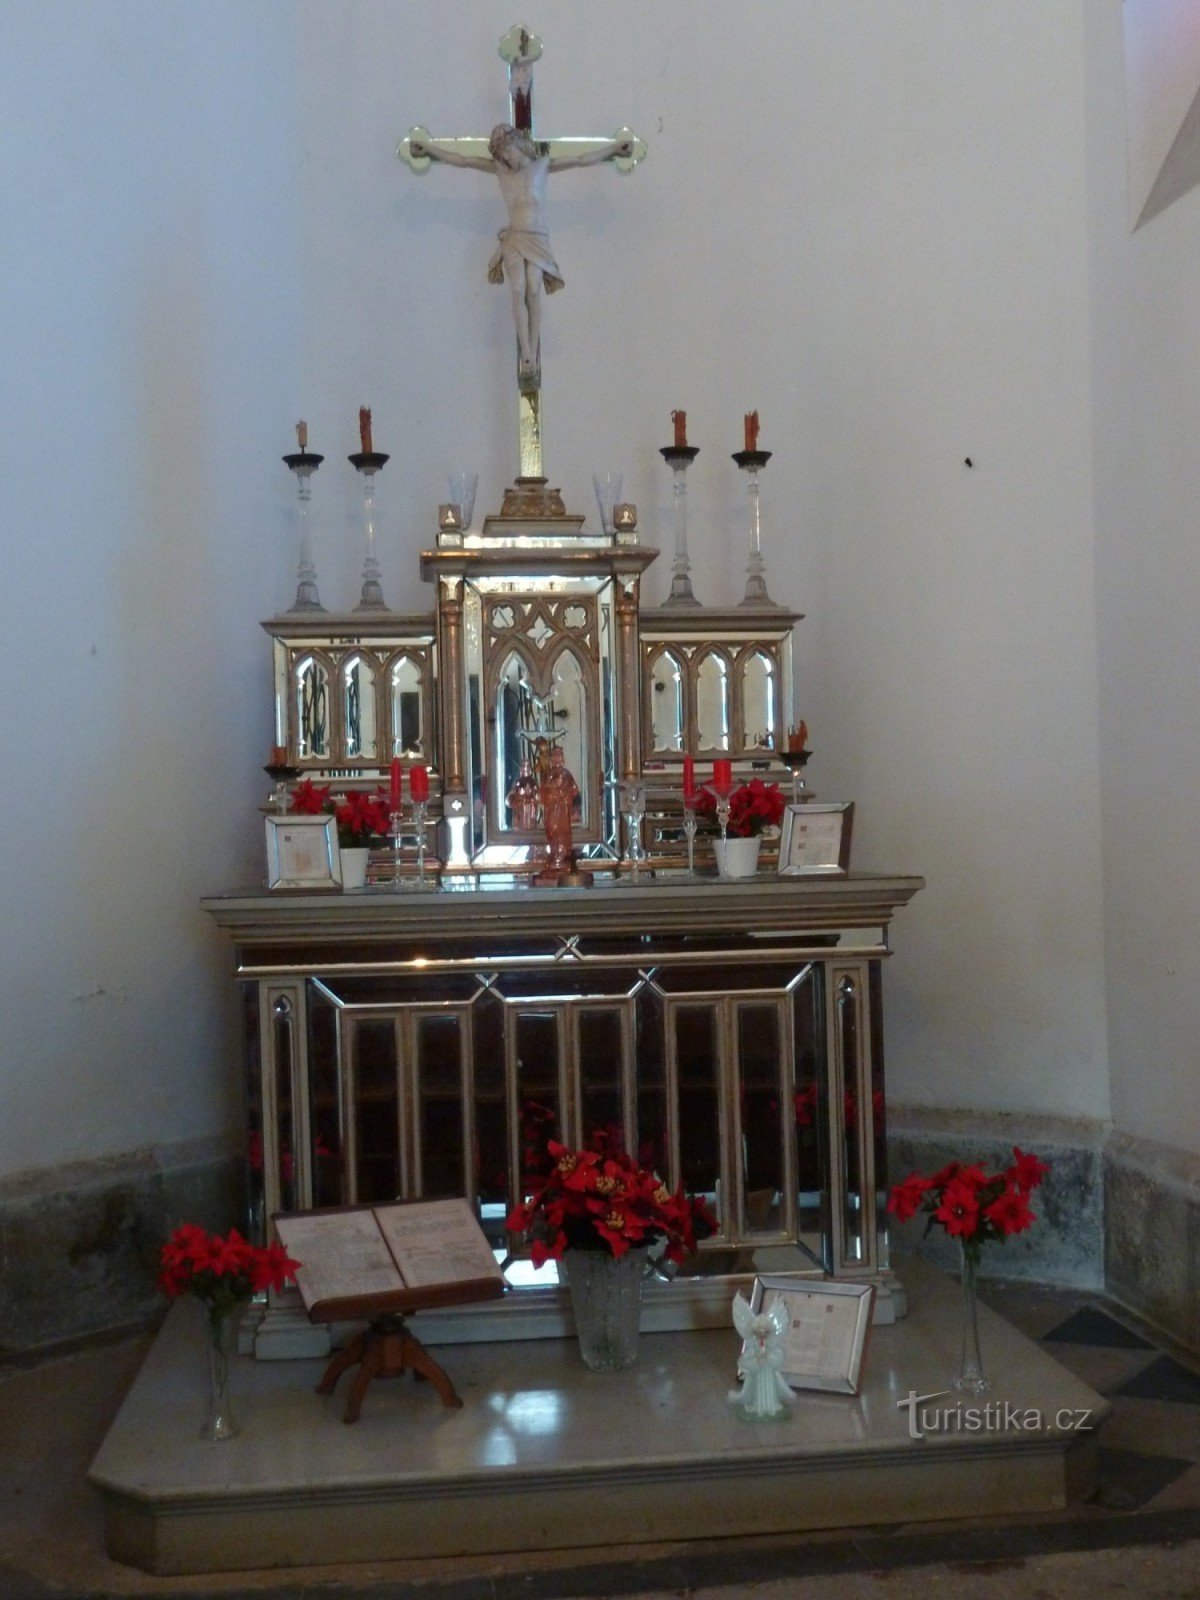 The Harrachov chapel of Saint Elizabeth with a unique glass bell